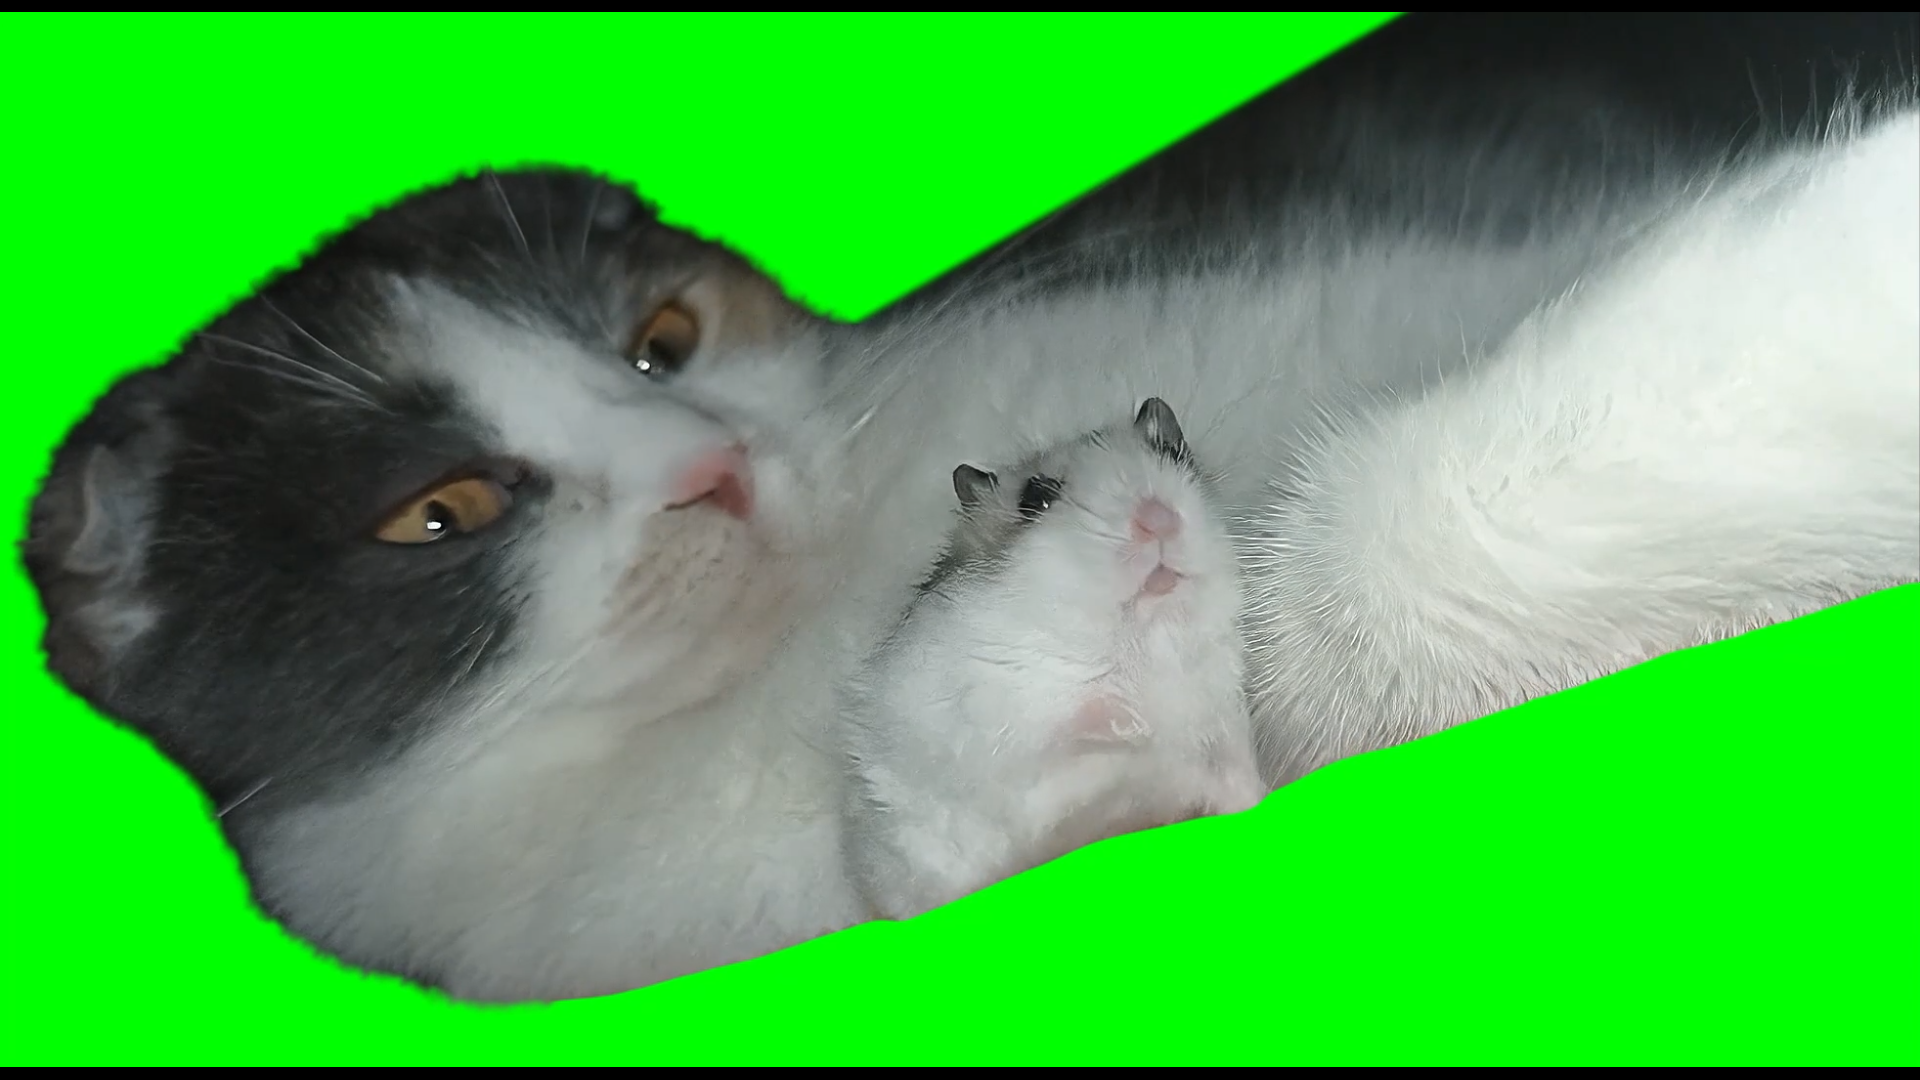 Hamster scared of Cat meme (Green Screen)